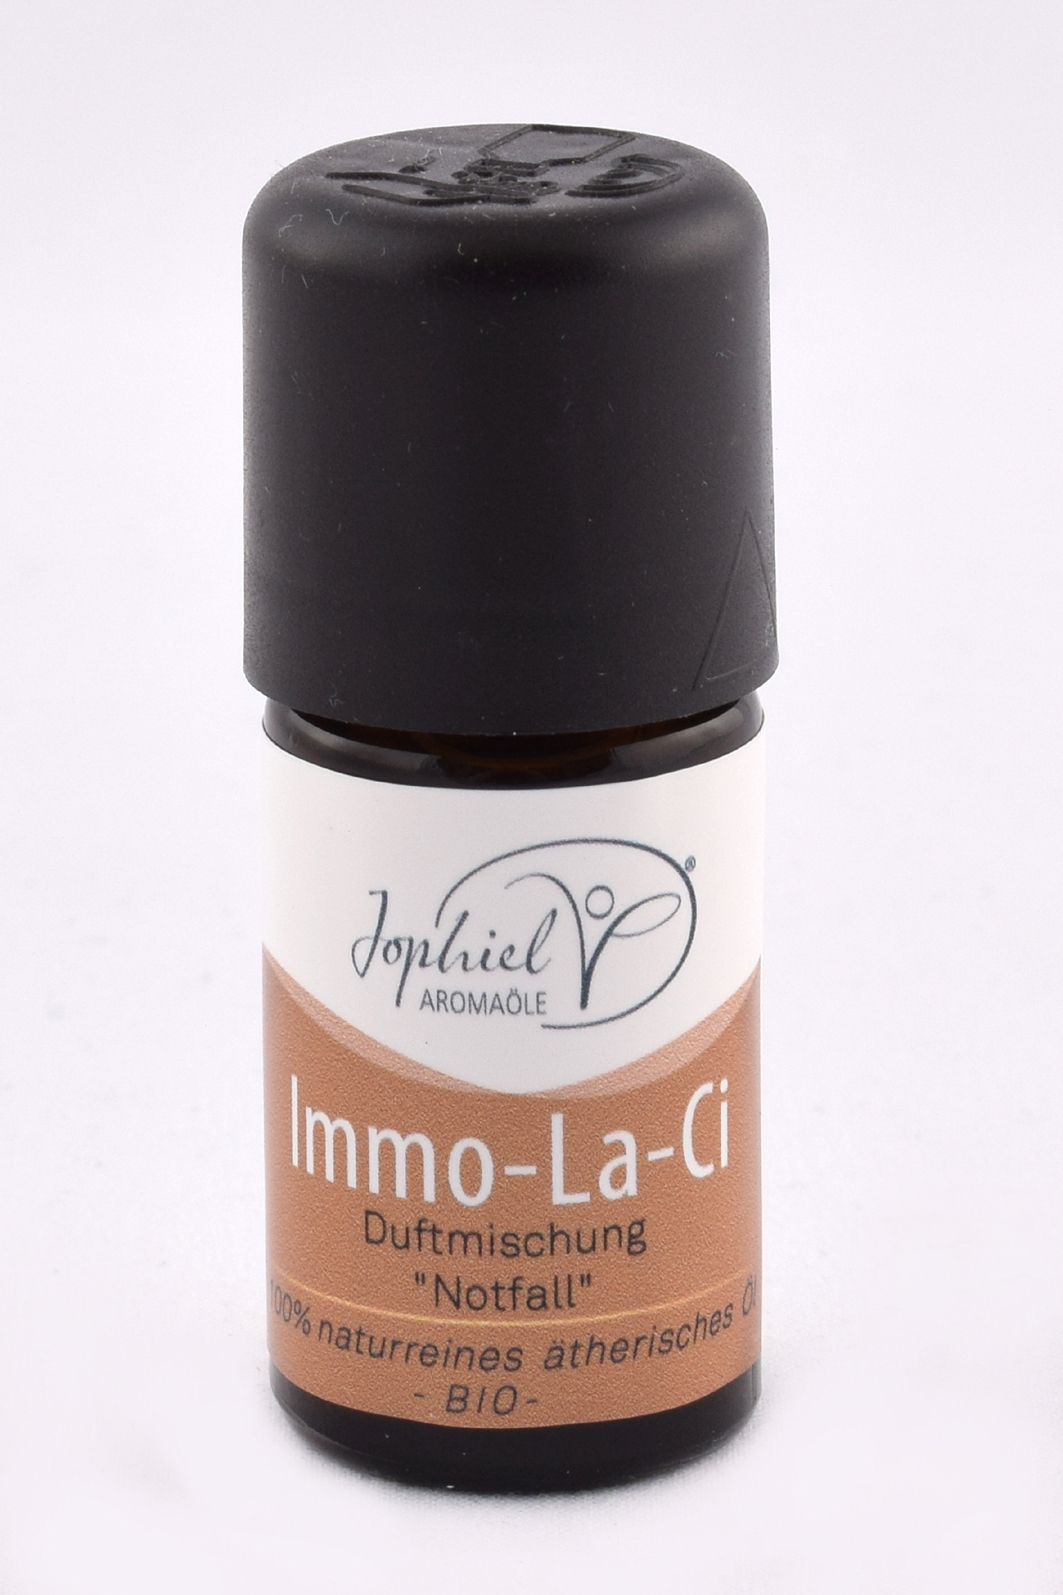 Immo-La-Ci Duftmischung Bio 5 ml